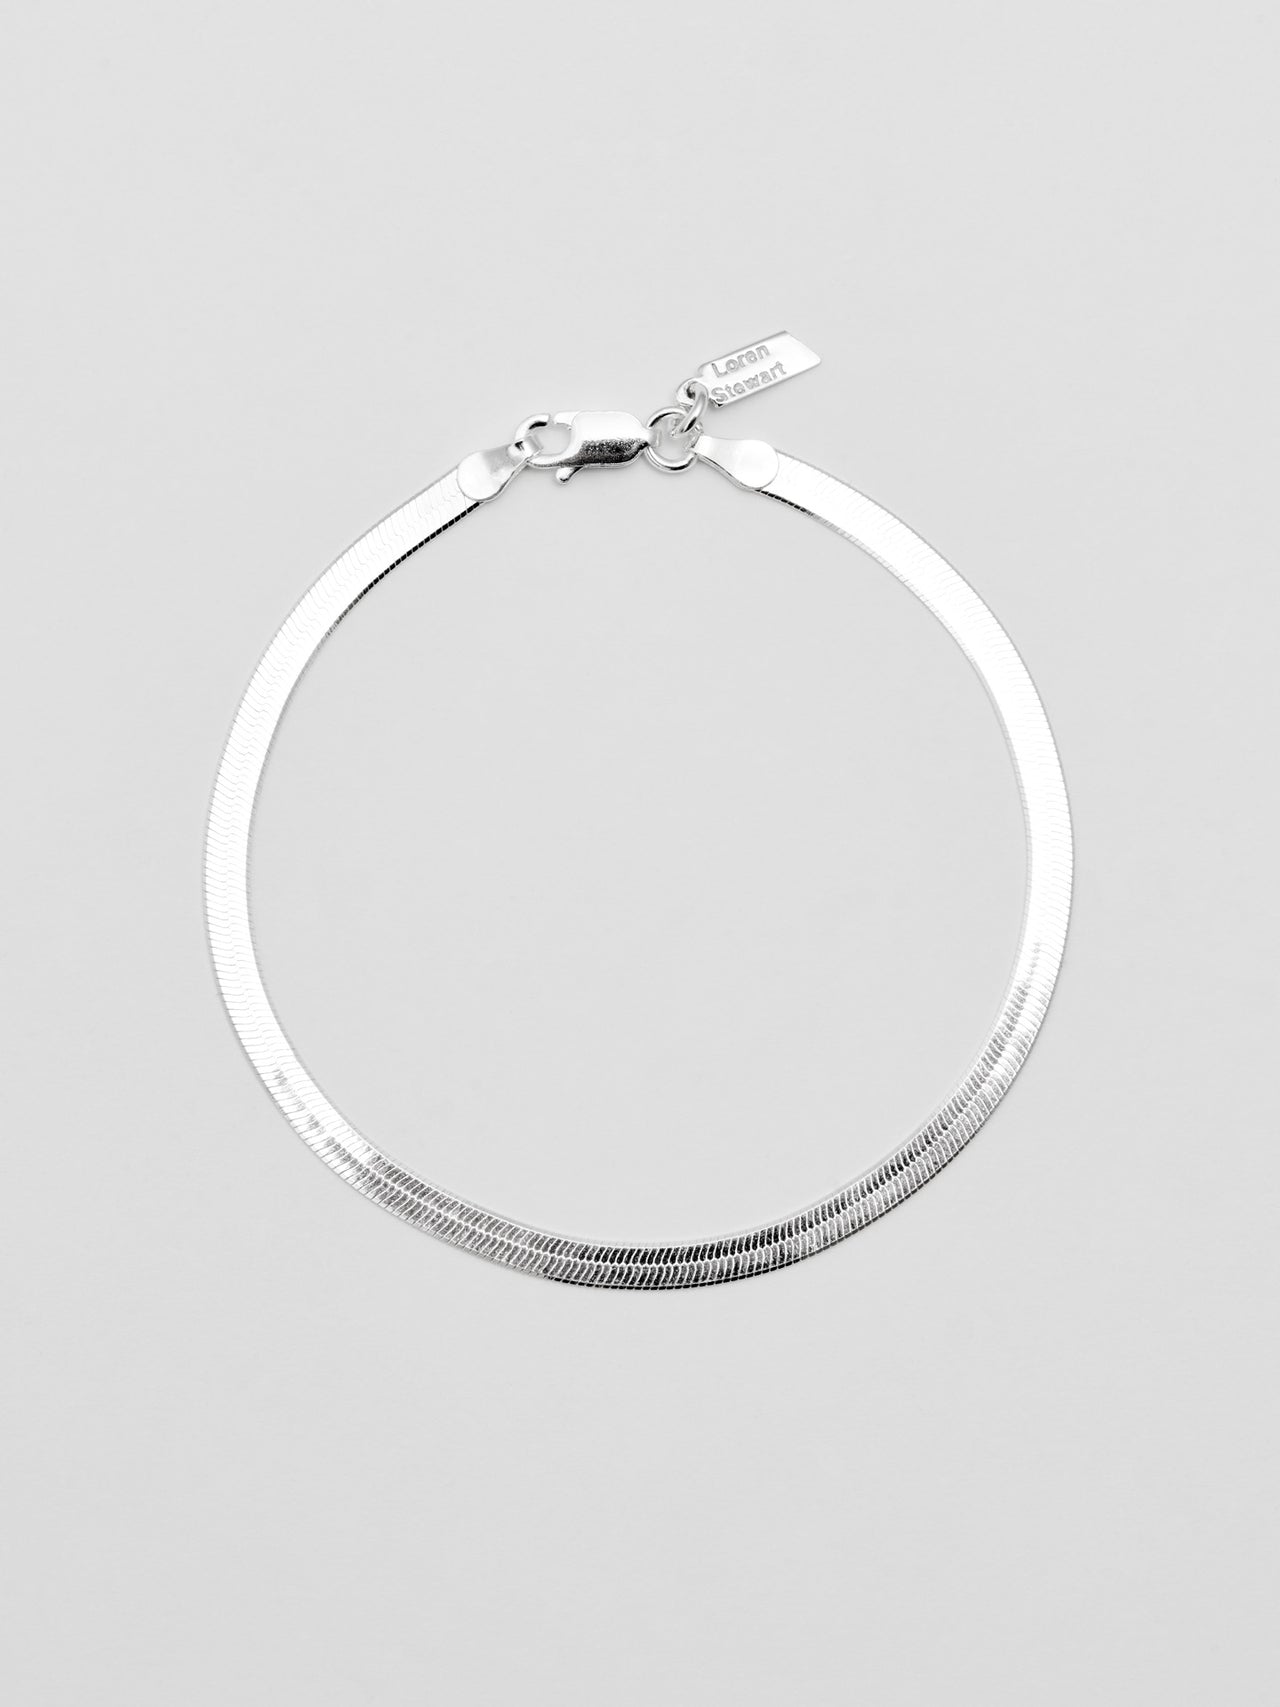 Sterling Silver Evil Eye Bracelet | SEHGAL GOLD ORNAMENTS PVT. LTD.